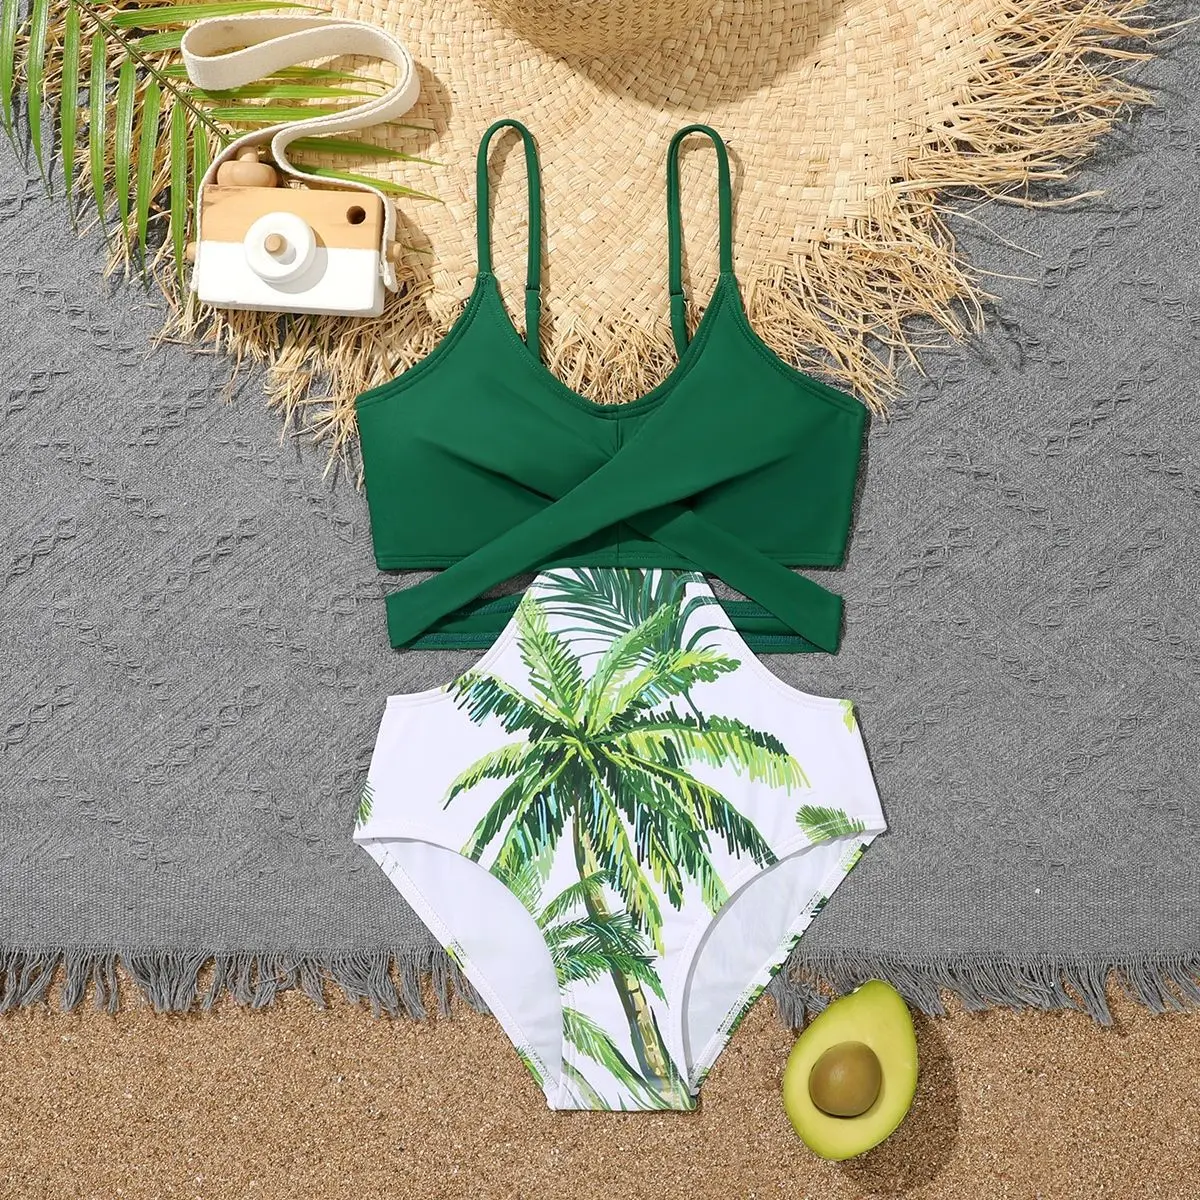 

Coconut Palm Print Girls One Piece Swimsuit Teens Kids Swimwear 7-12 Year Children Beachwear Cut Out Bathing Suit Monokini Green